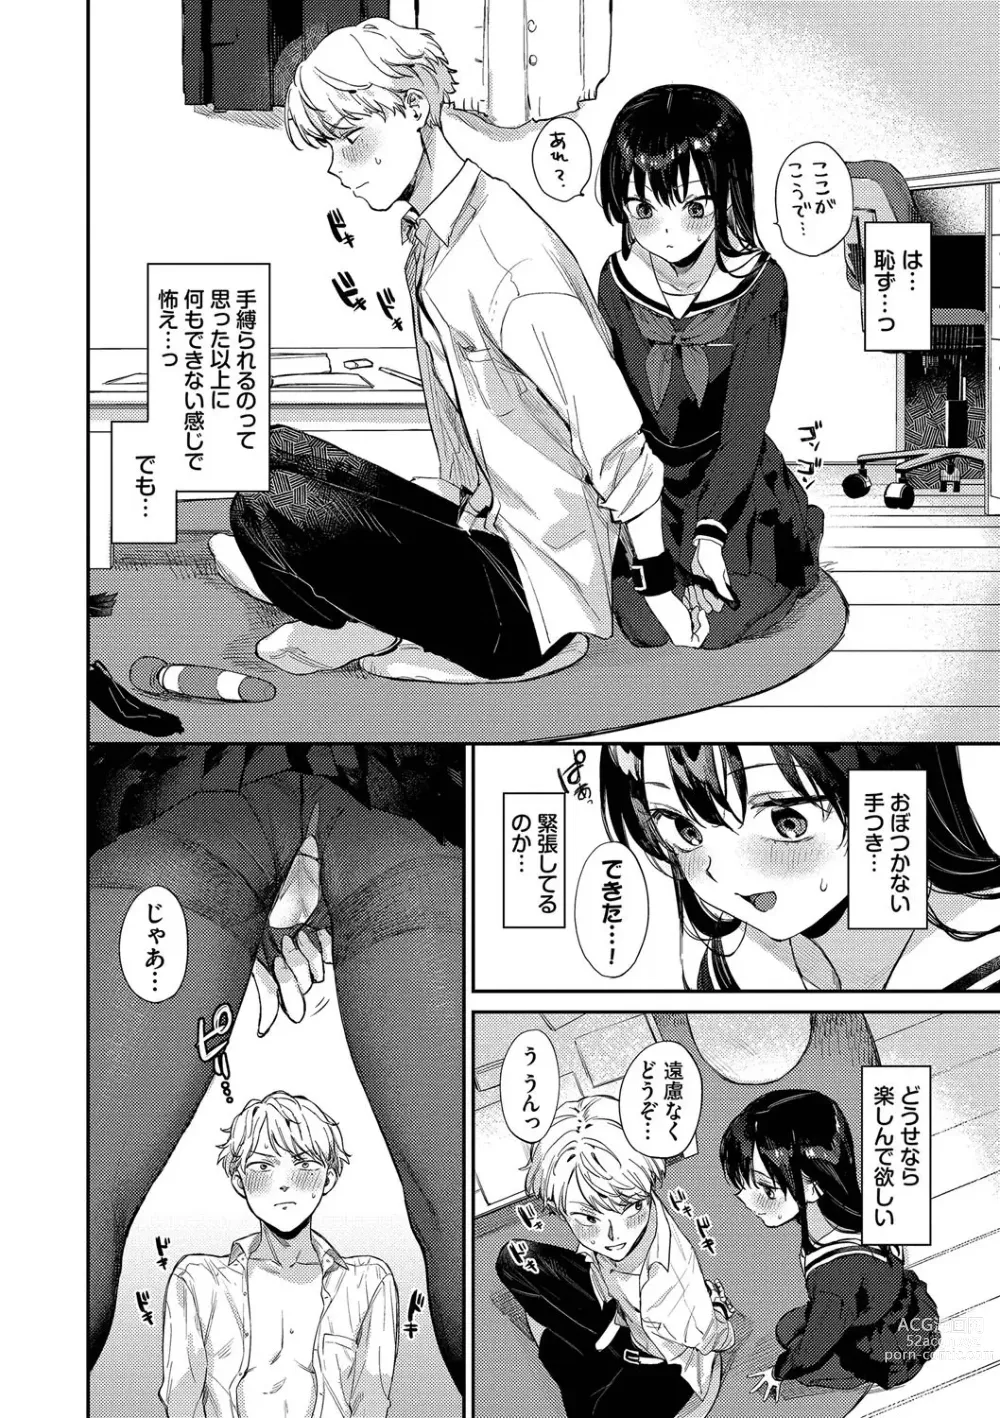 Page 9 of manga Mutsuri Bloom